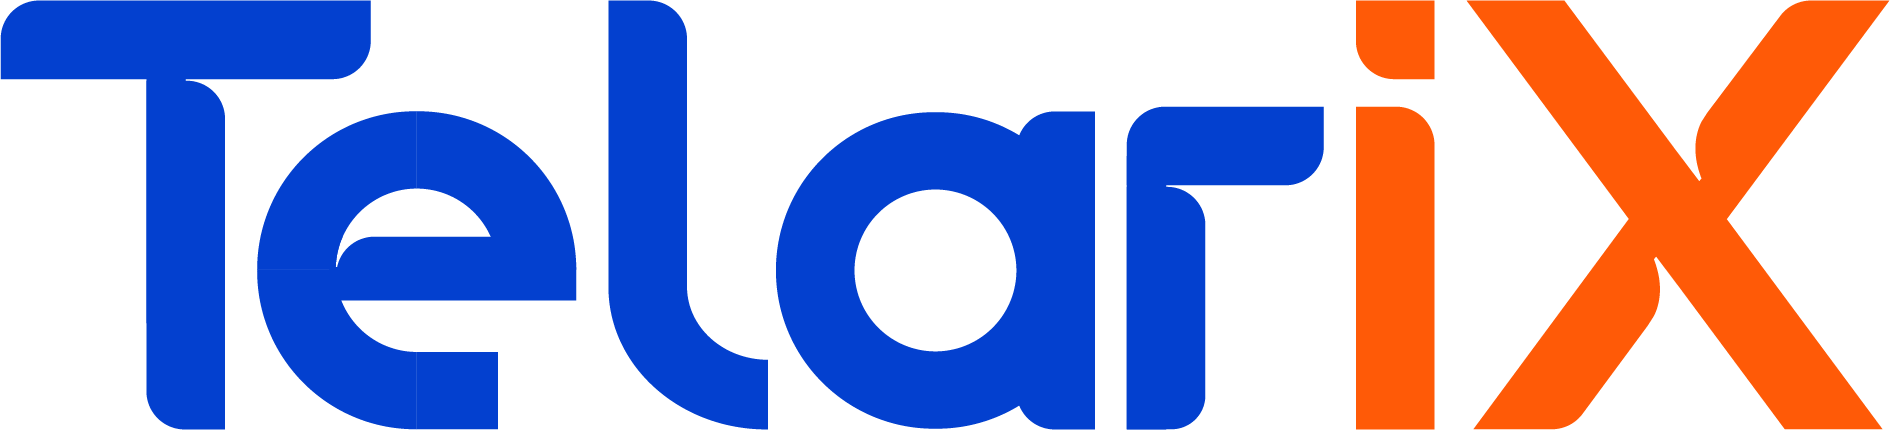 Telarix logo color